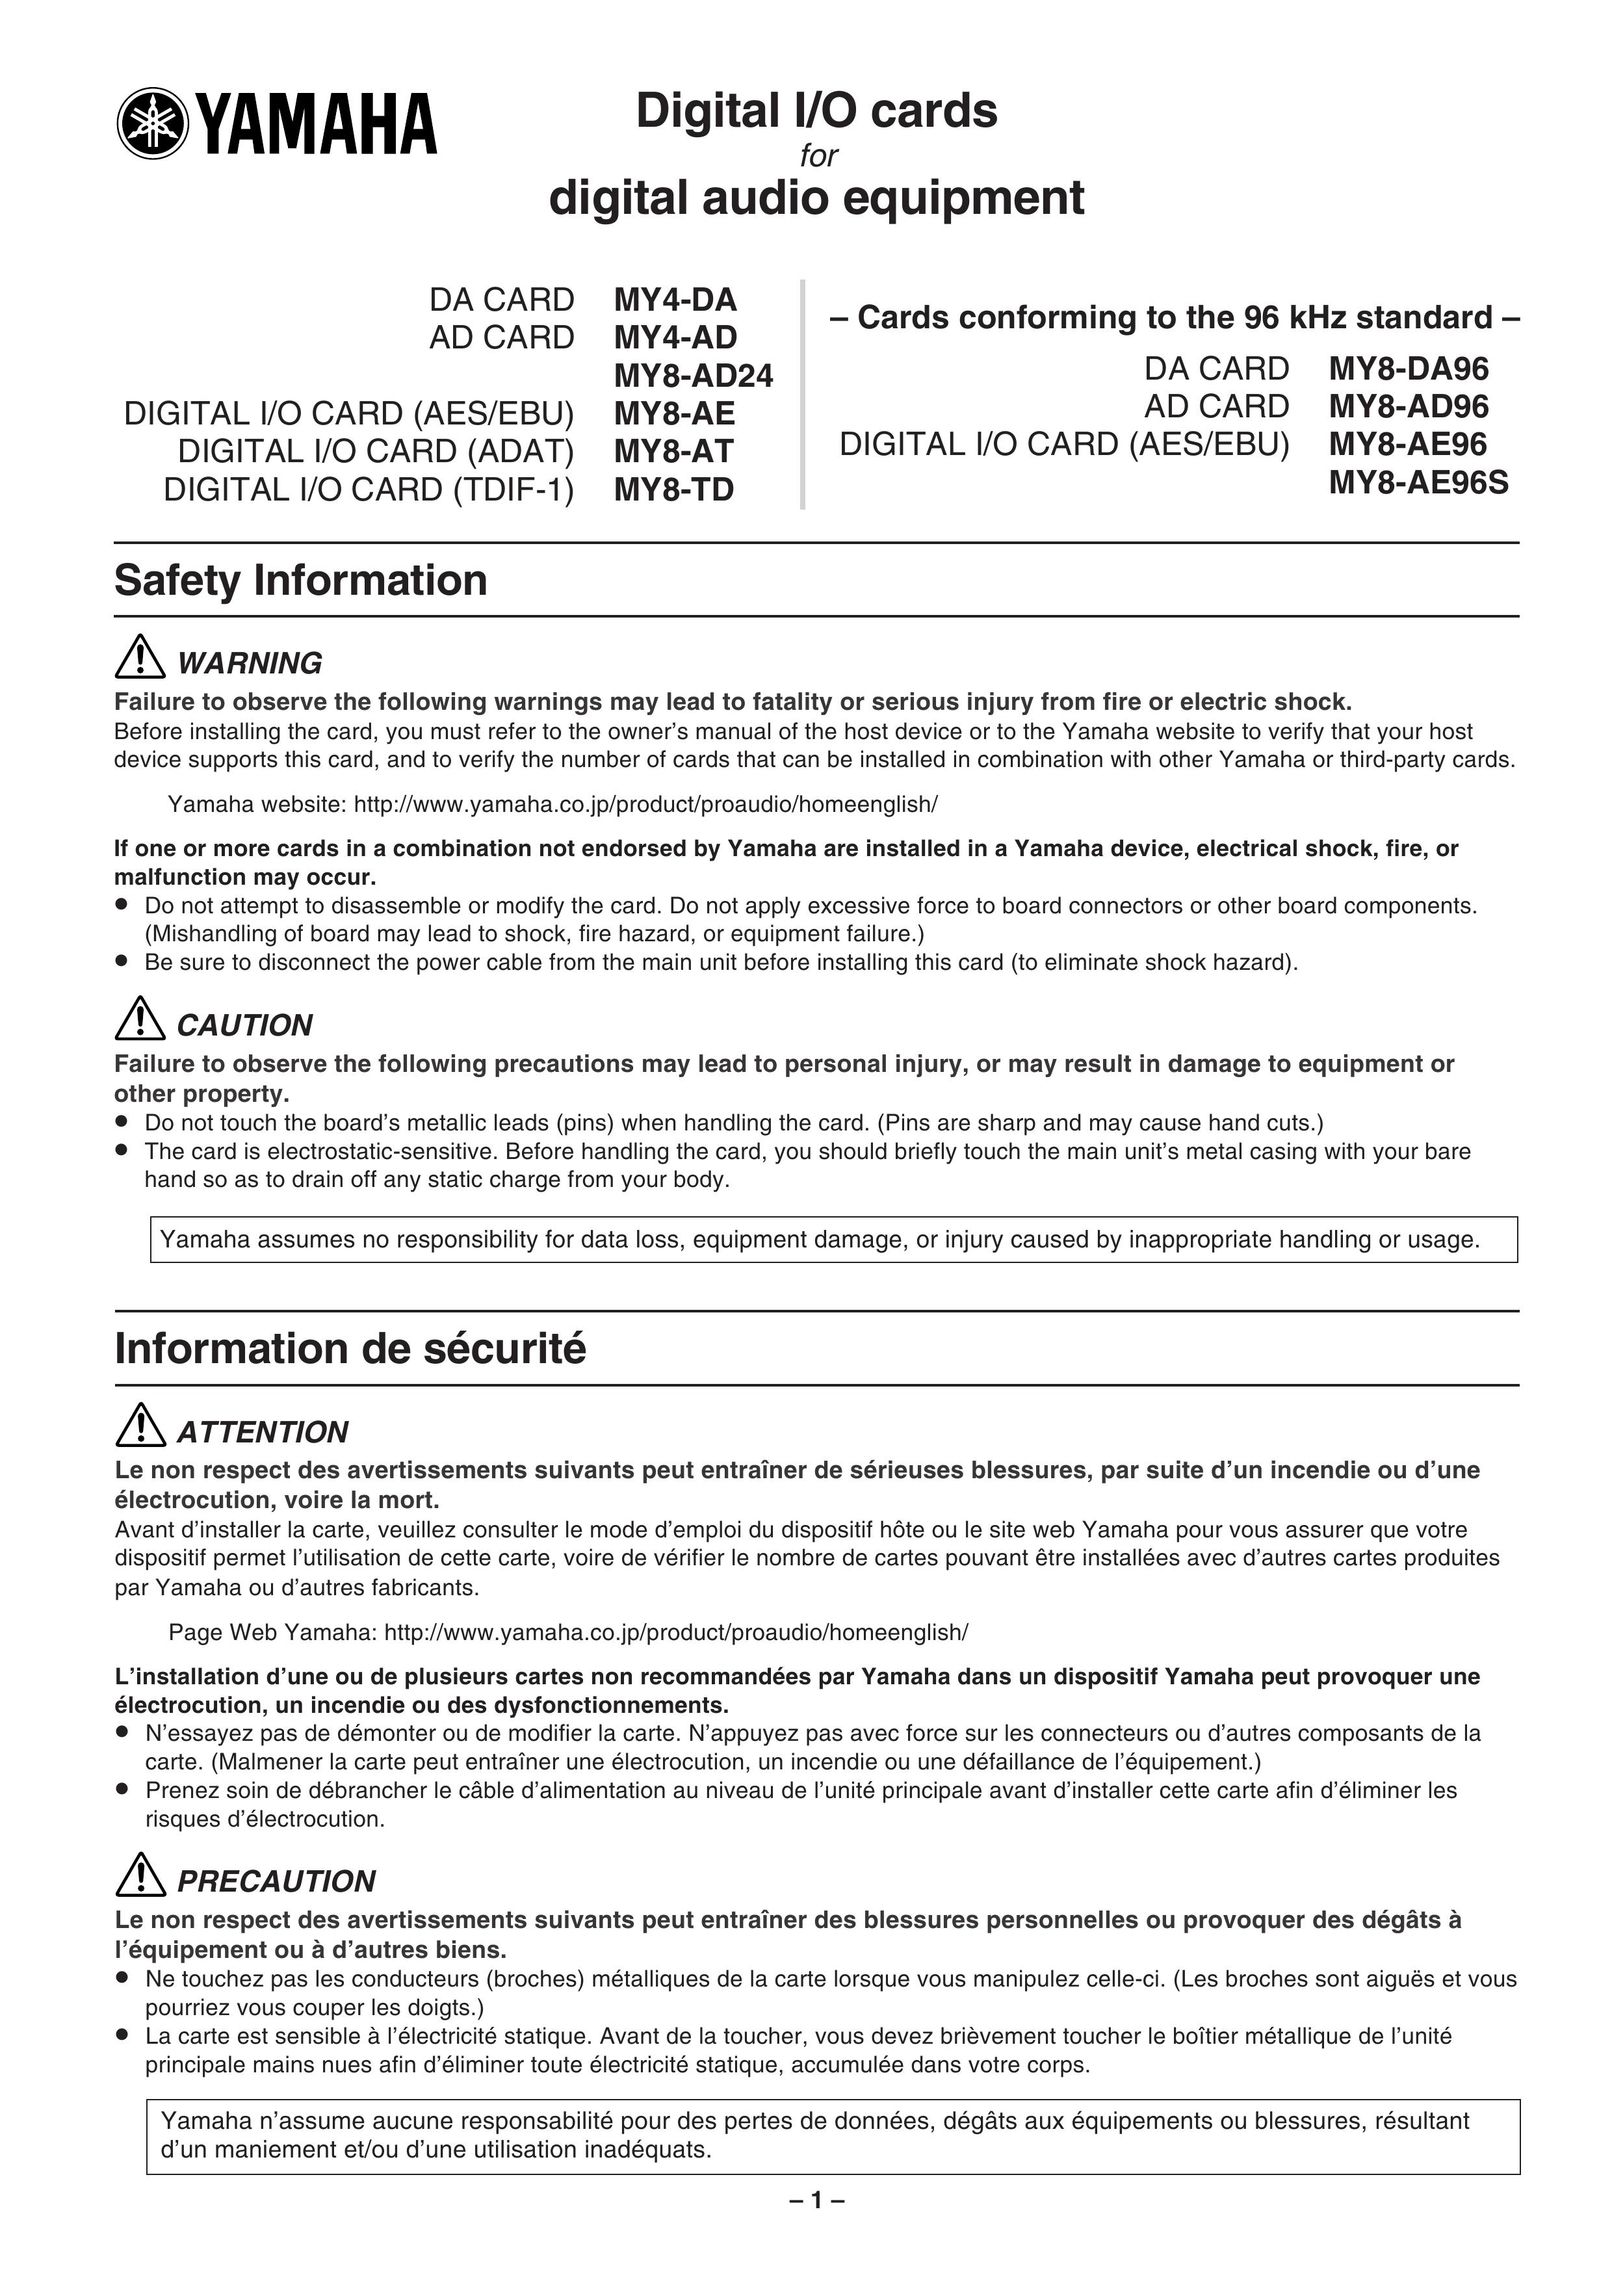 Yamaha MY4-AD Computer Hardware User Manual